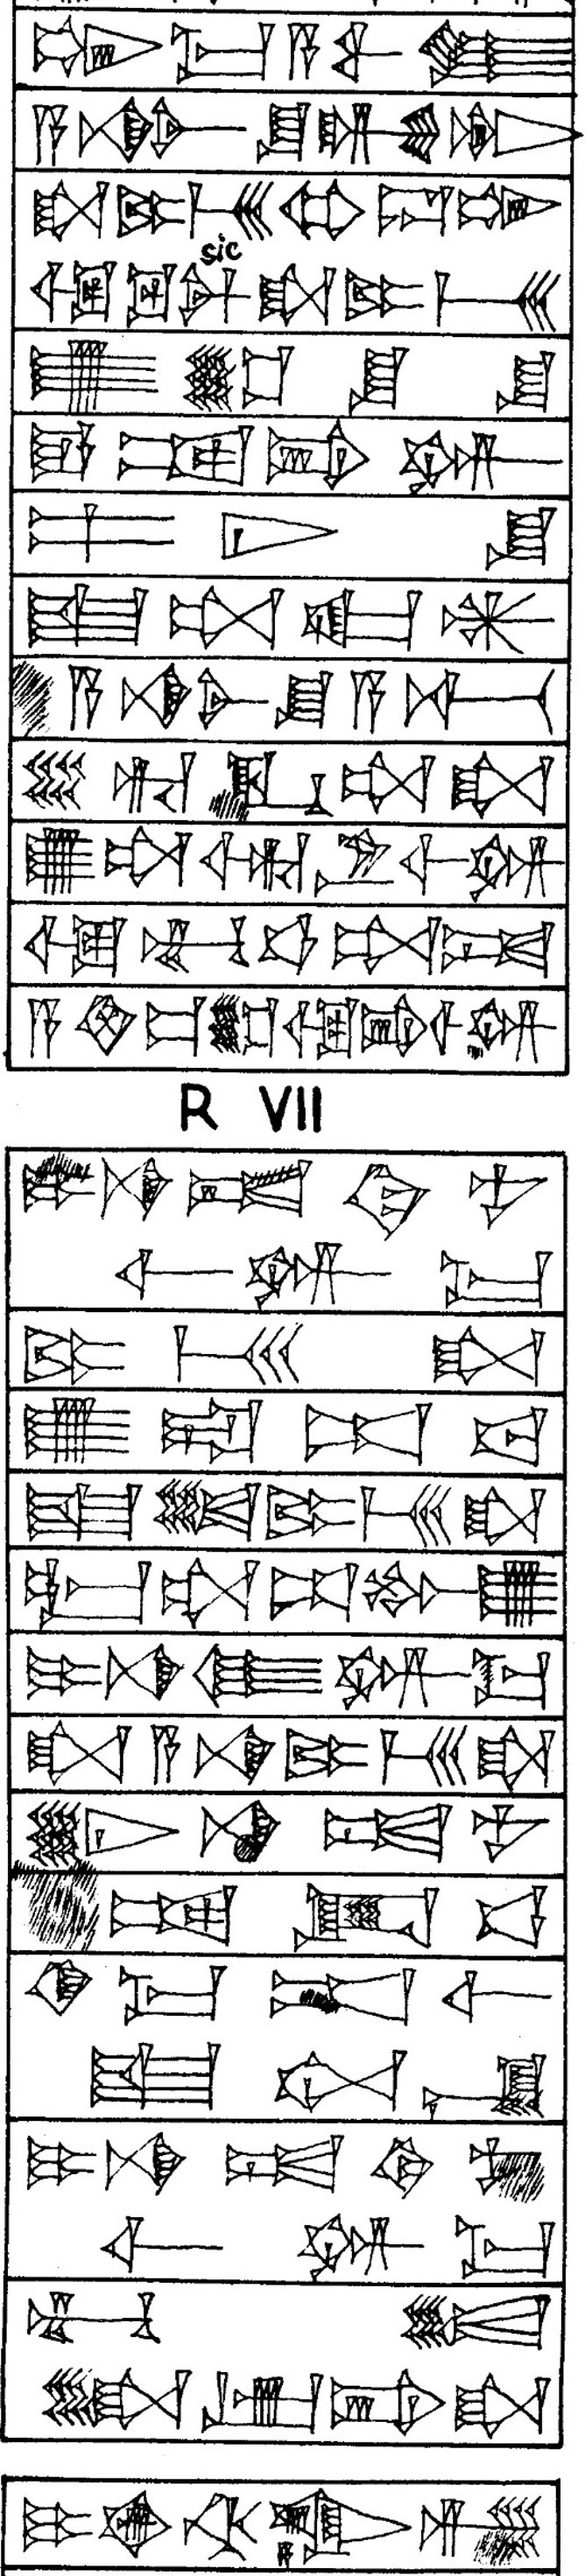 Law § 137 - Cuneiform - Law Code of Hammurabi